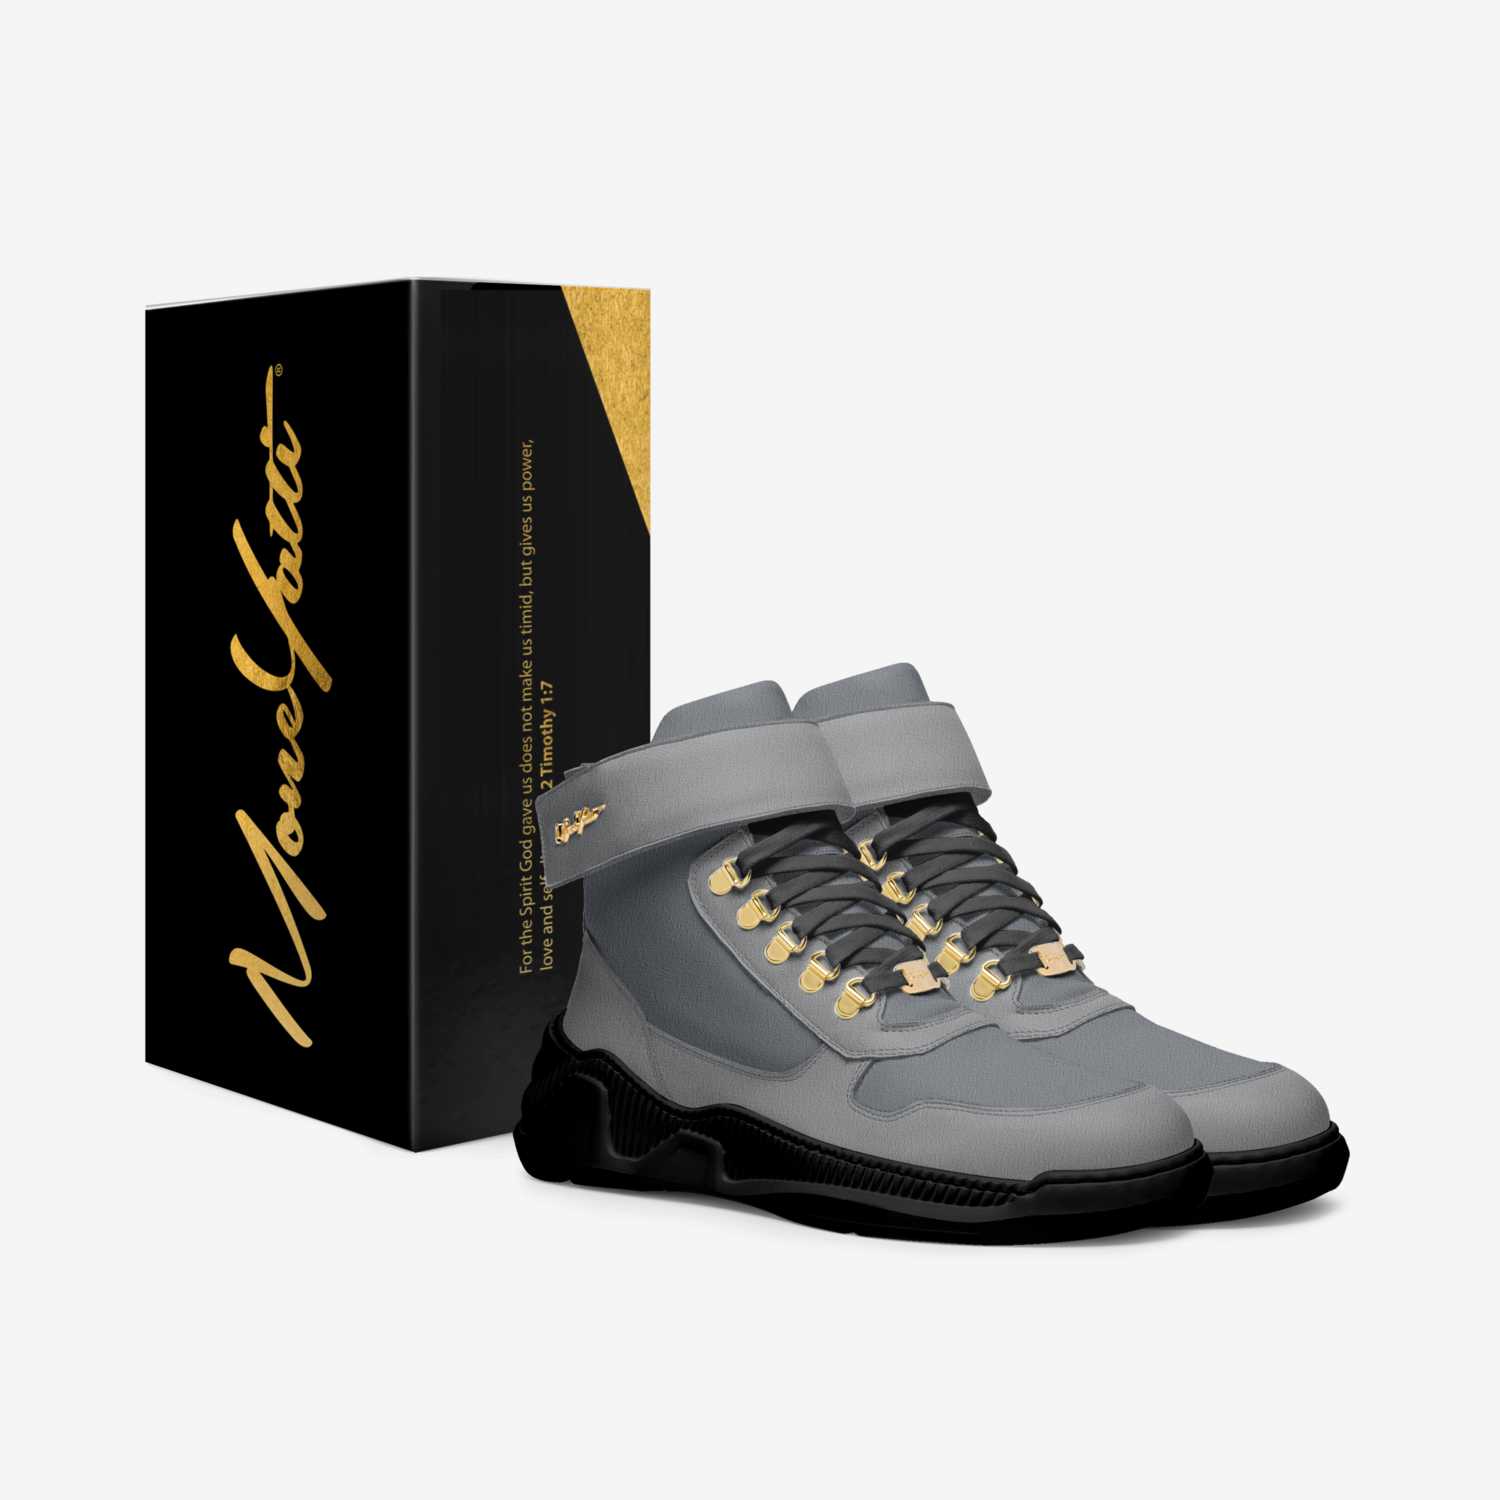 Moneyatti Traps2 custom made in Italy shoes by Moneyatti Brand | Box view